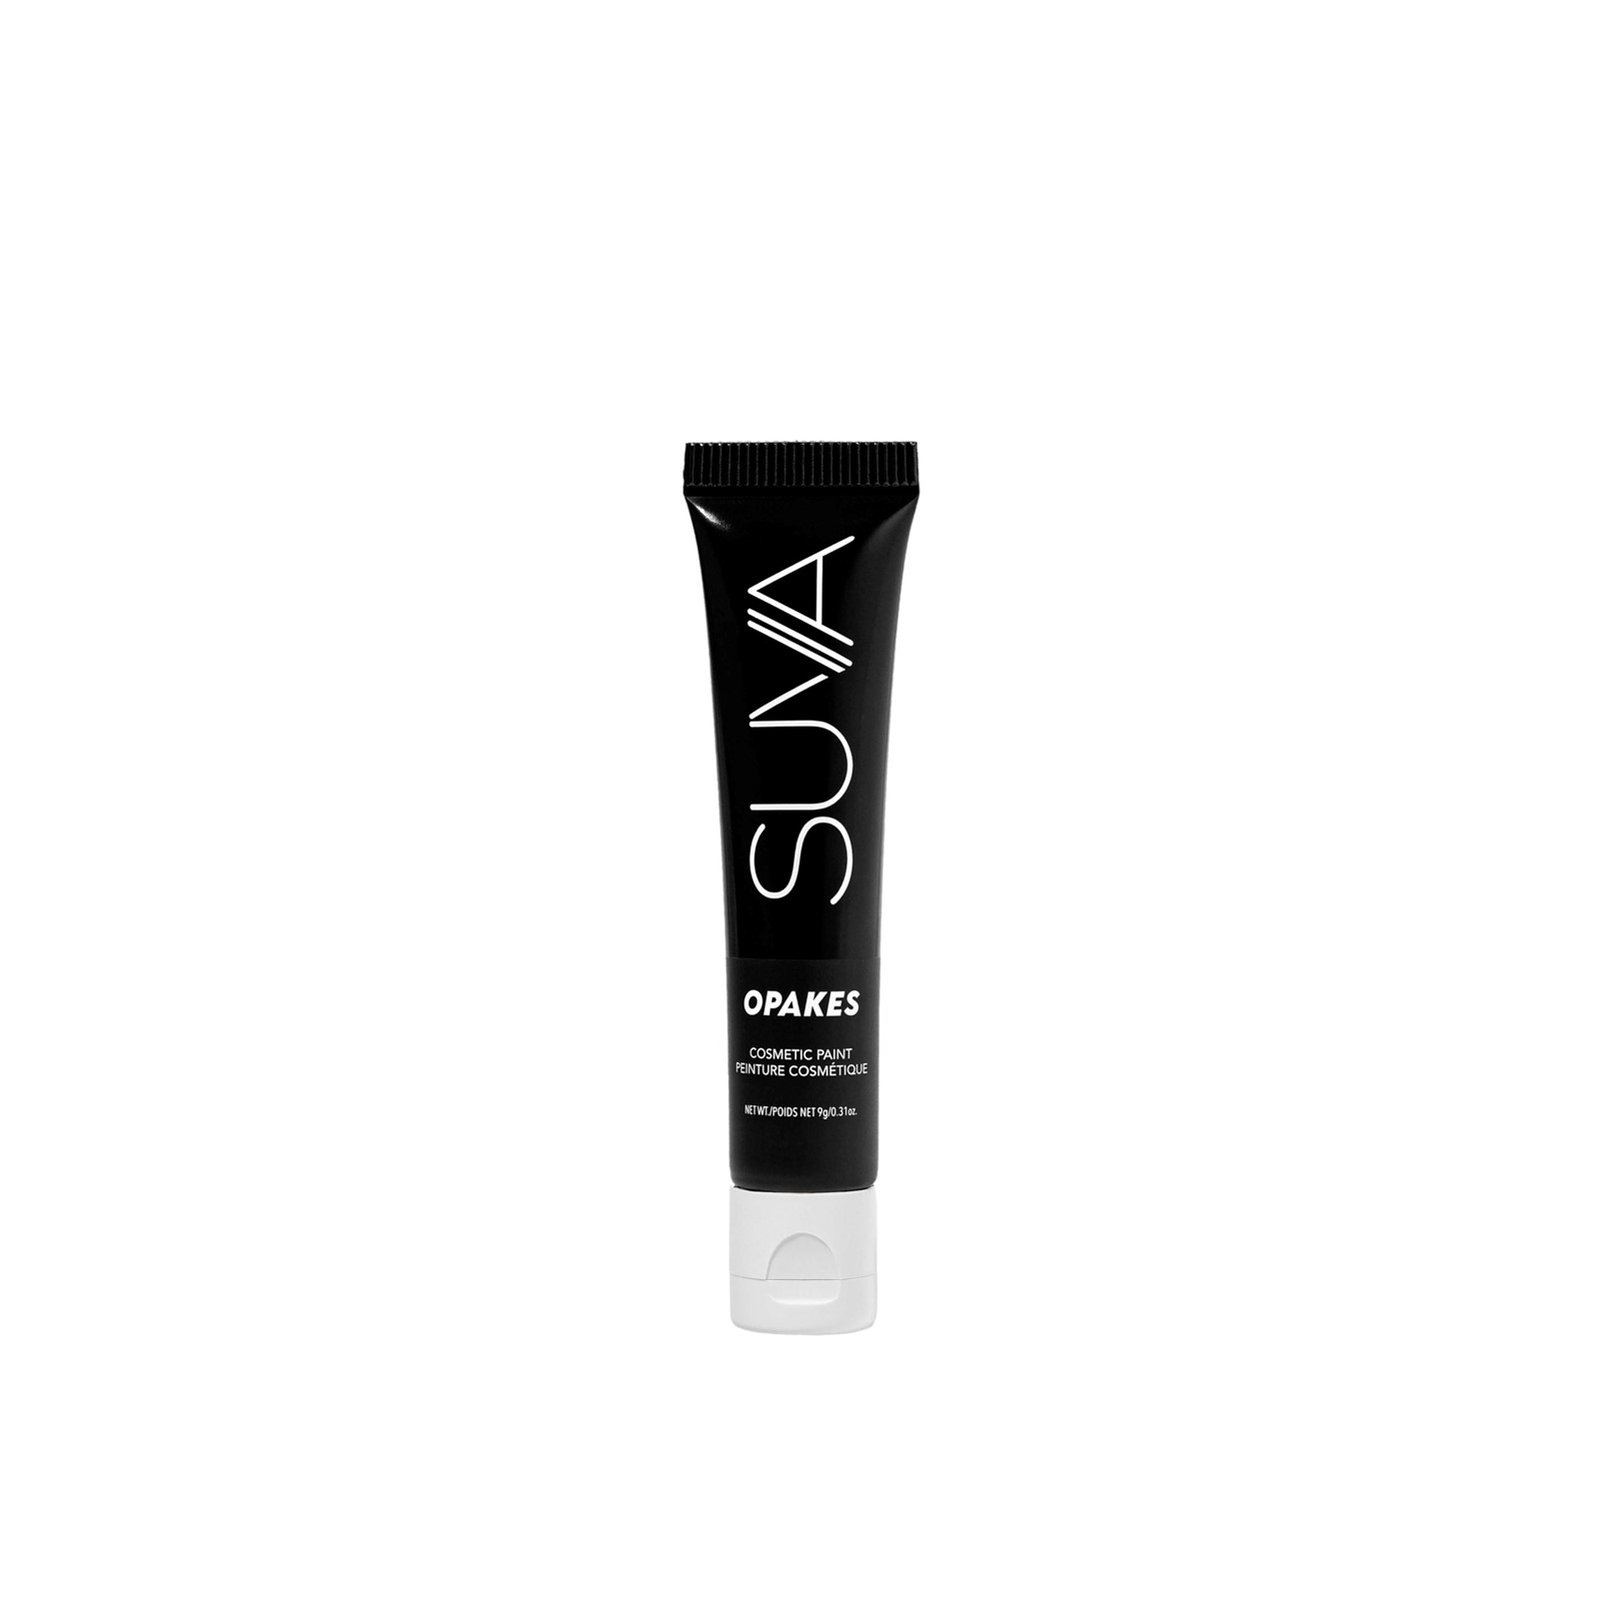 SUVA Beauty Opakes Cosmetic Paint Bamboozled Black 9g (0.31 oz)